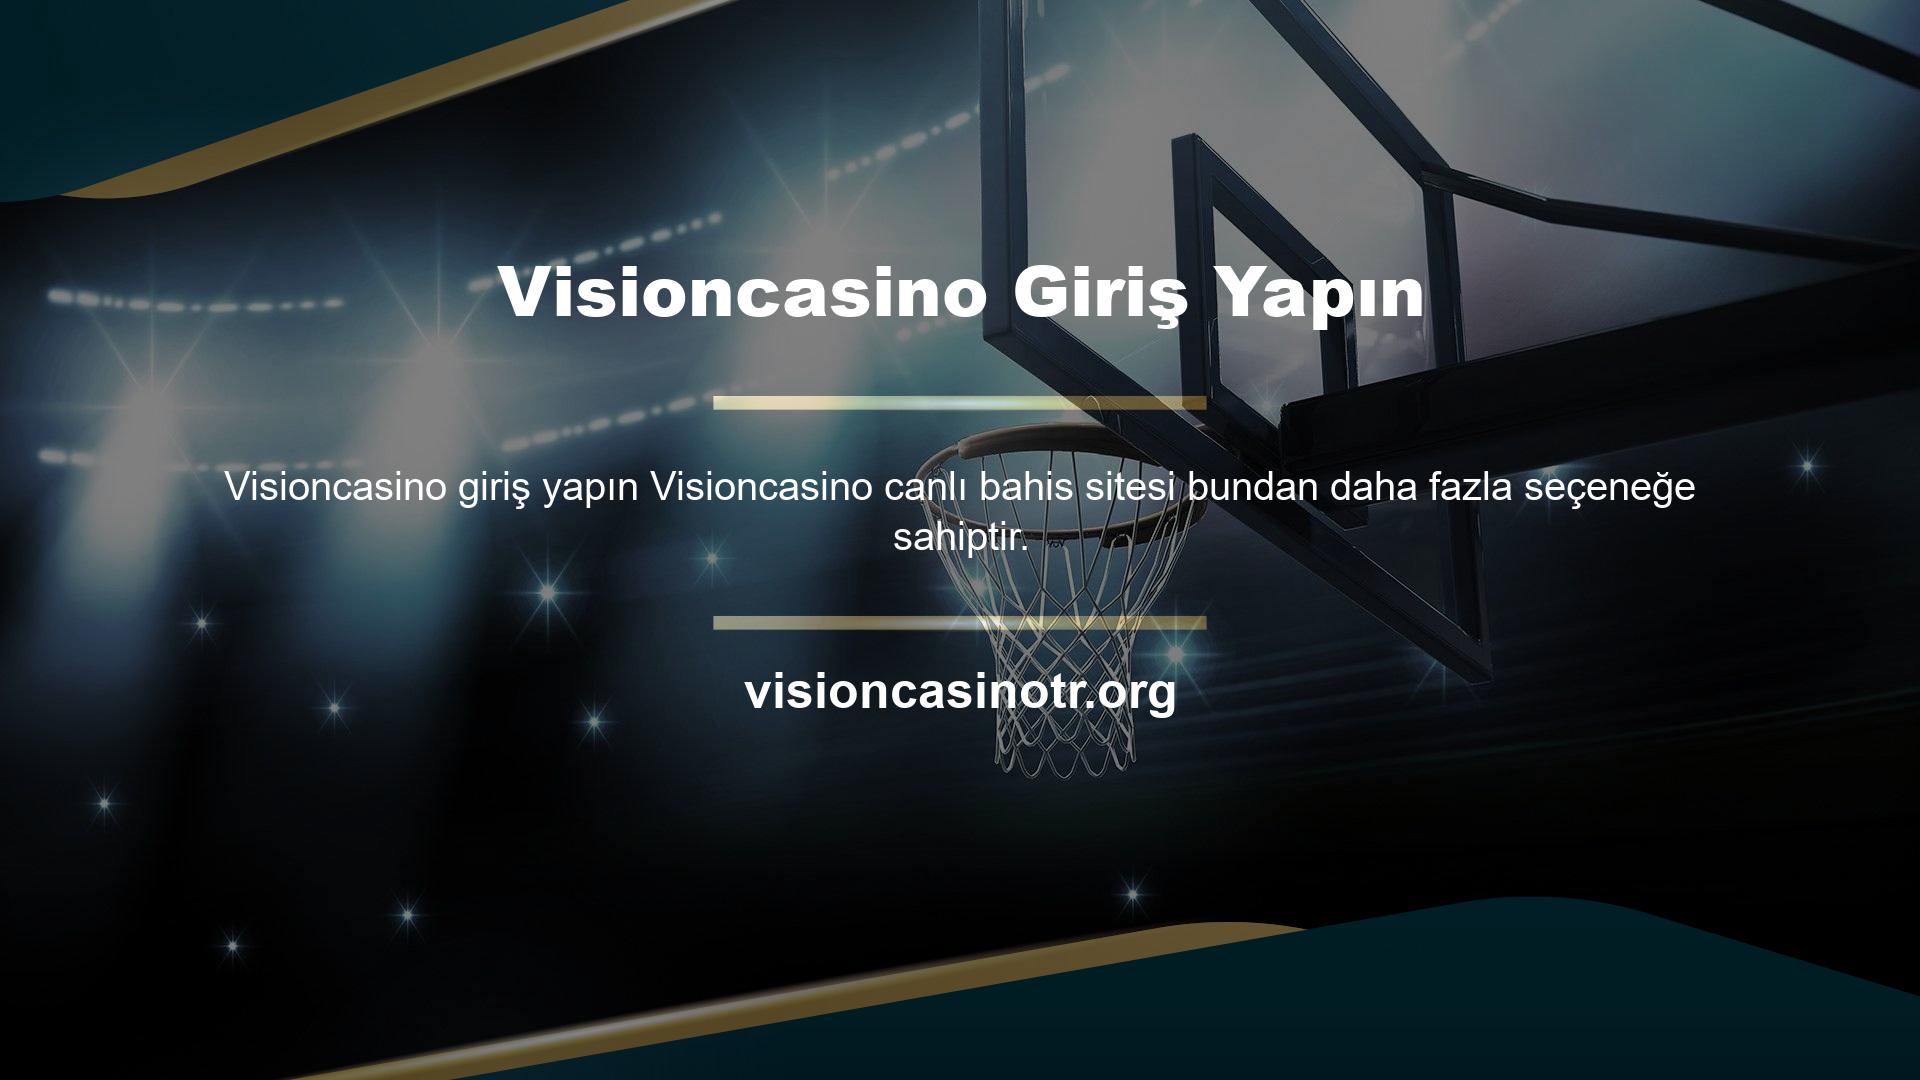 Canlı maçlara izin veren sitelerden biri Visioncasino TV